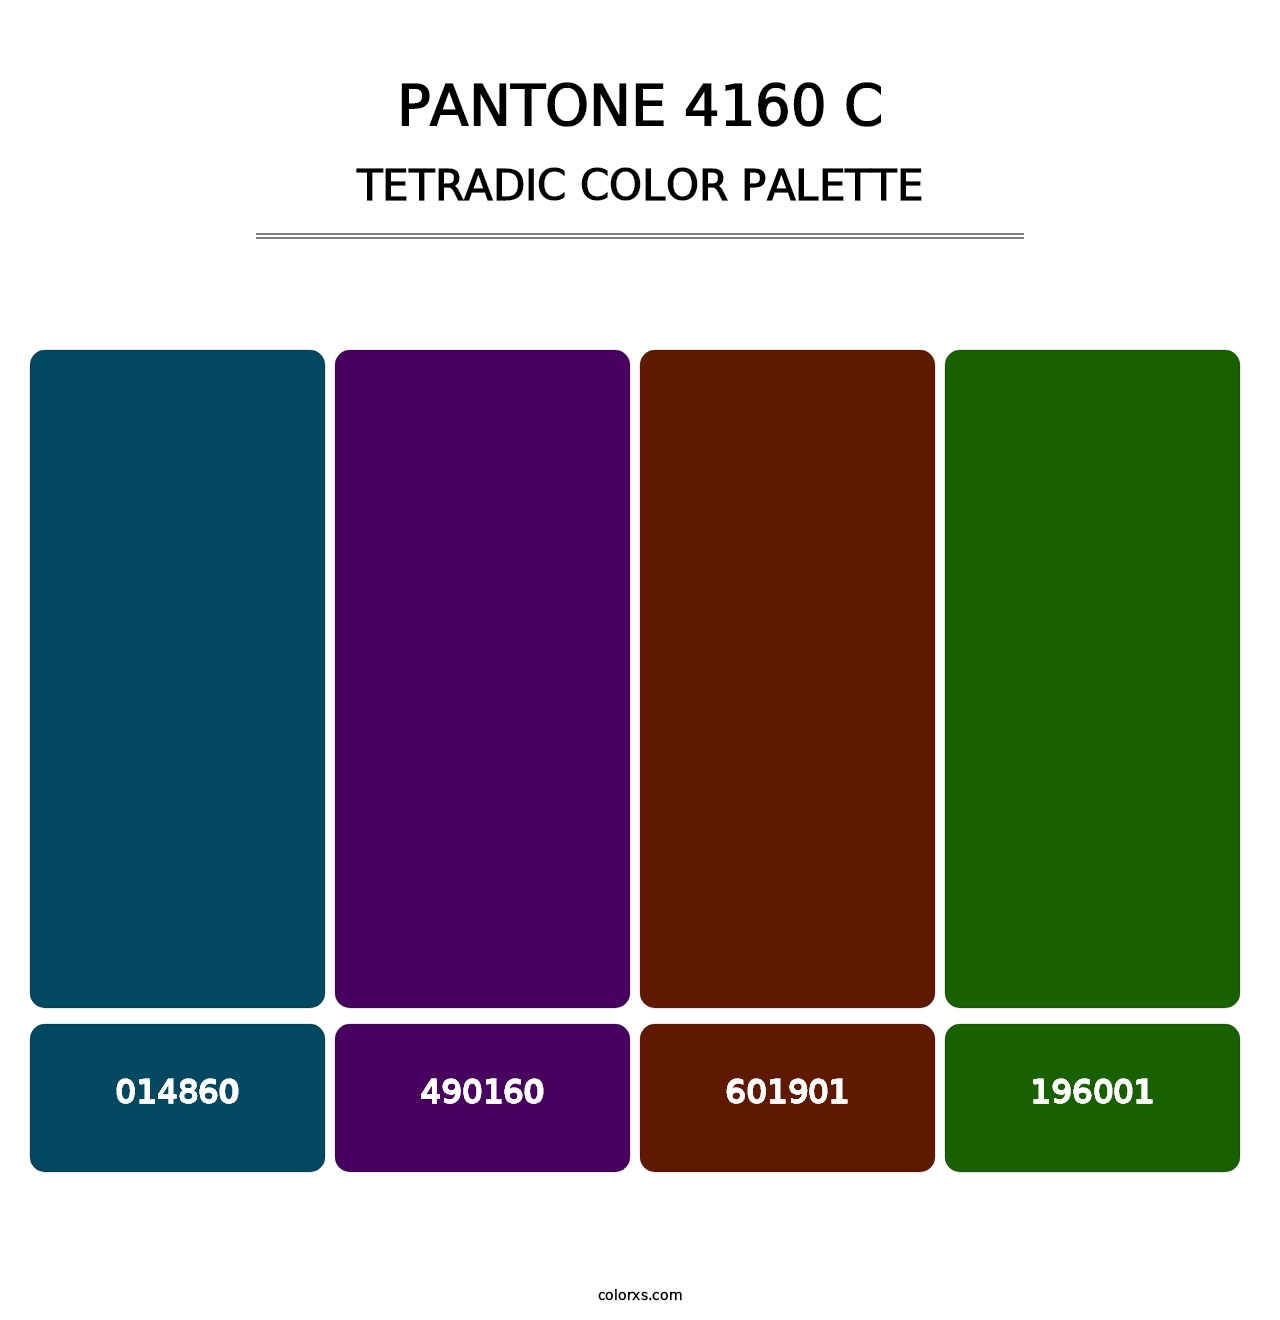 PANTONE 4160 C - Tetradic Color Palette